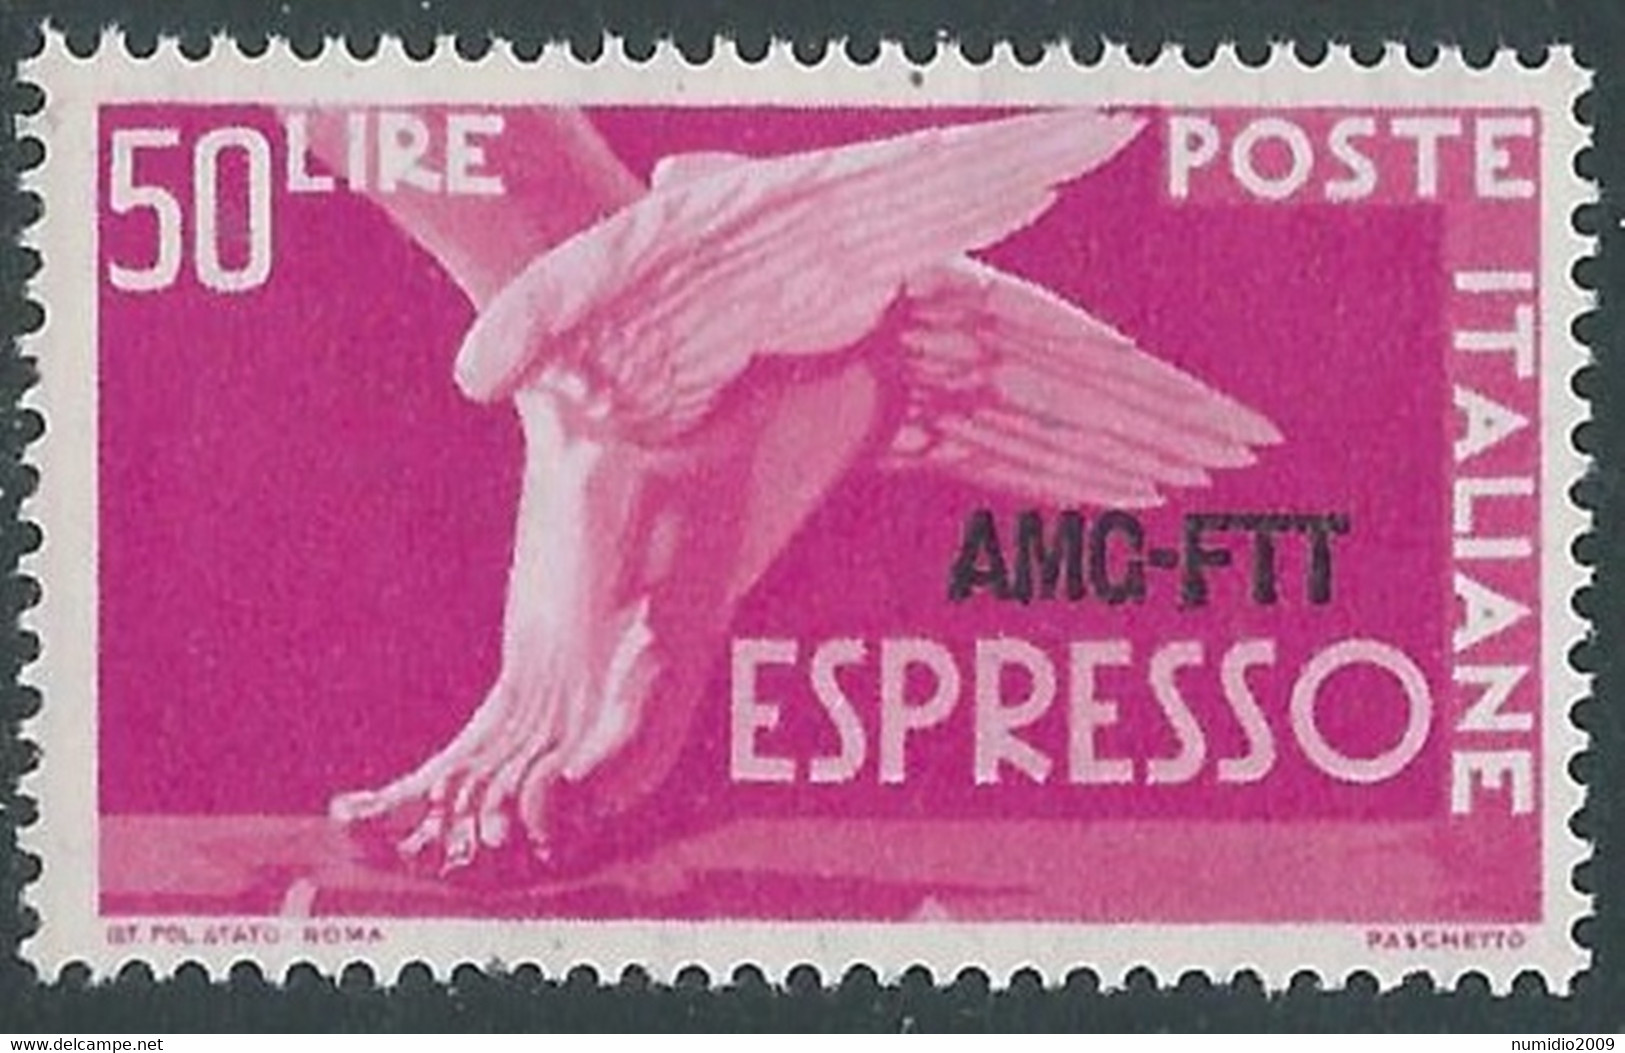 1952 TRIESTE A ESPRESSO 50 LIRE MNH ** - RE16-10 - Express Mail